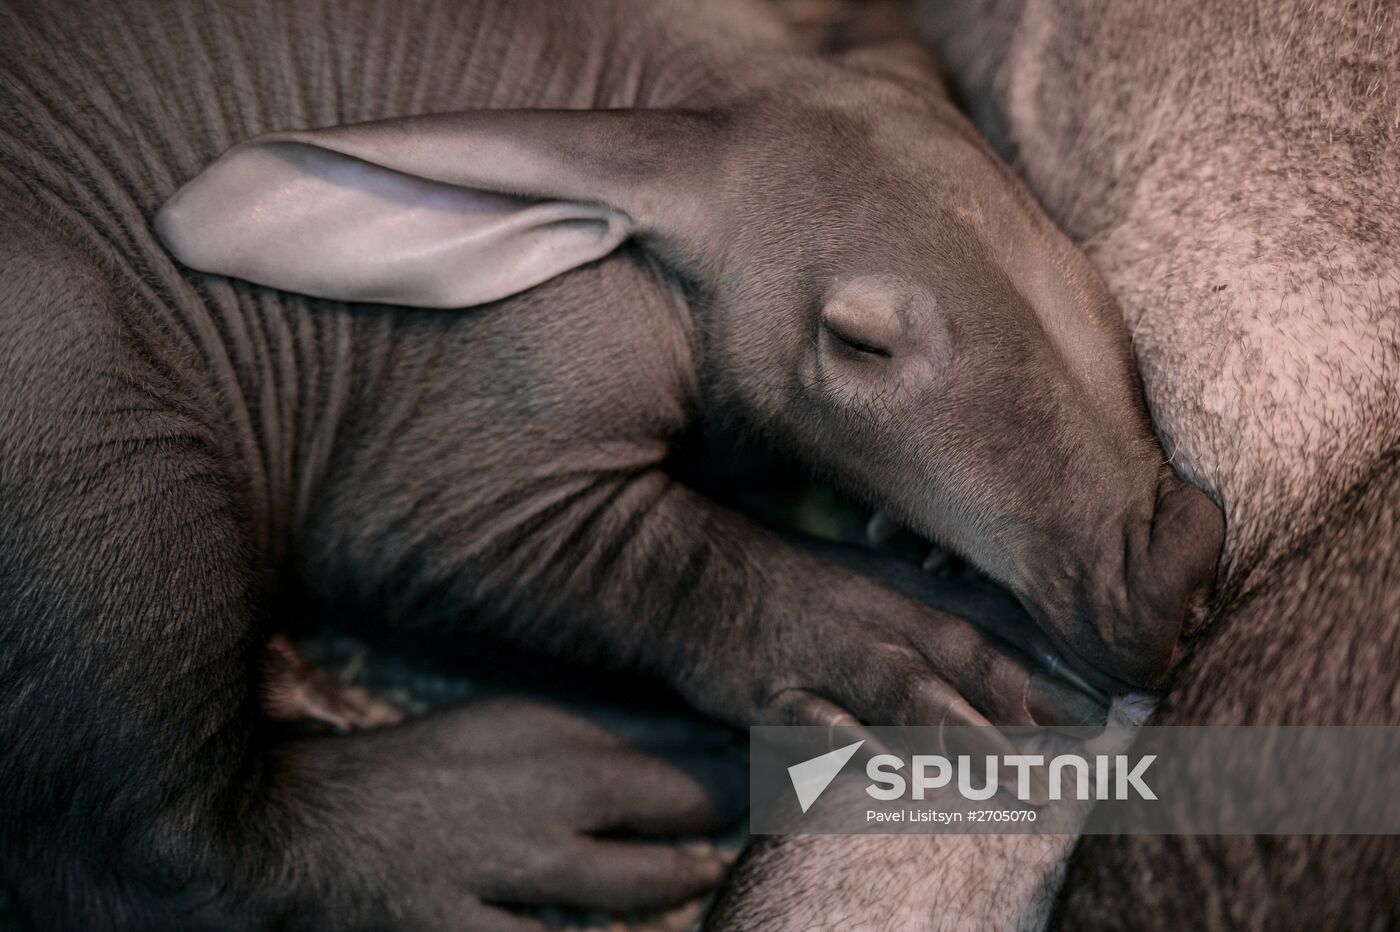 New-born aardvark at Yekaterinburg Zoo